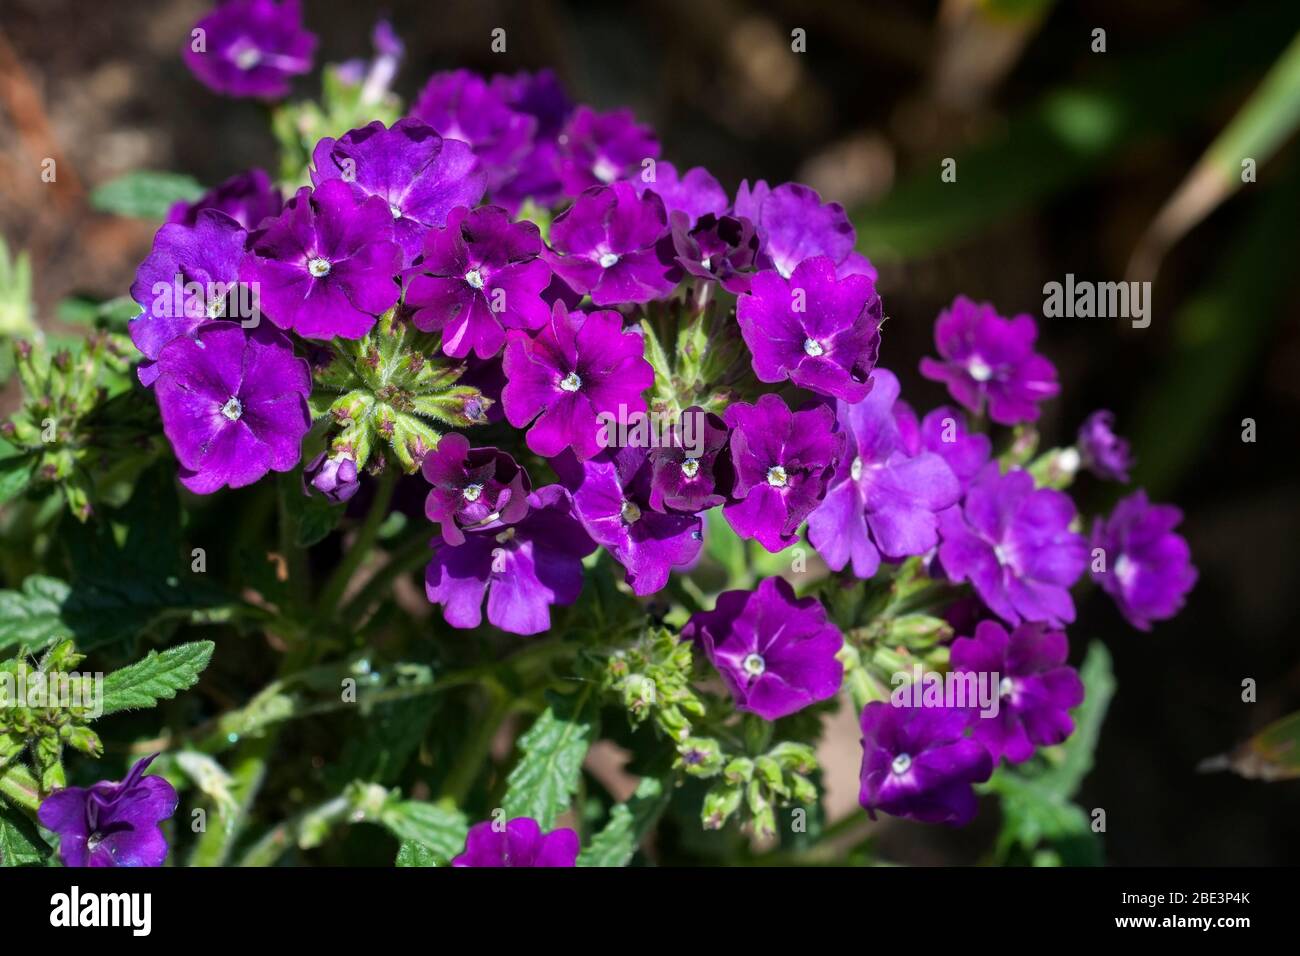 Purple flowers of Garden vervain (Endurascape Purple), Verbena hybrida Stock Photo